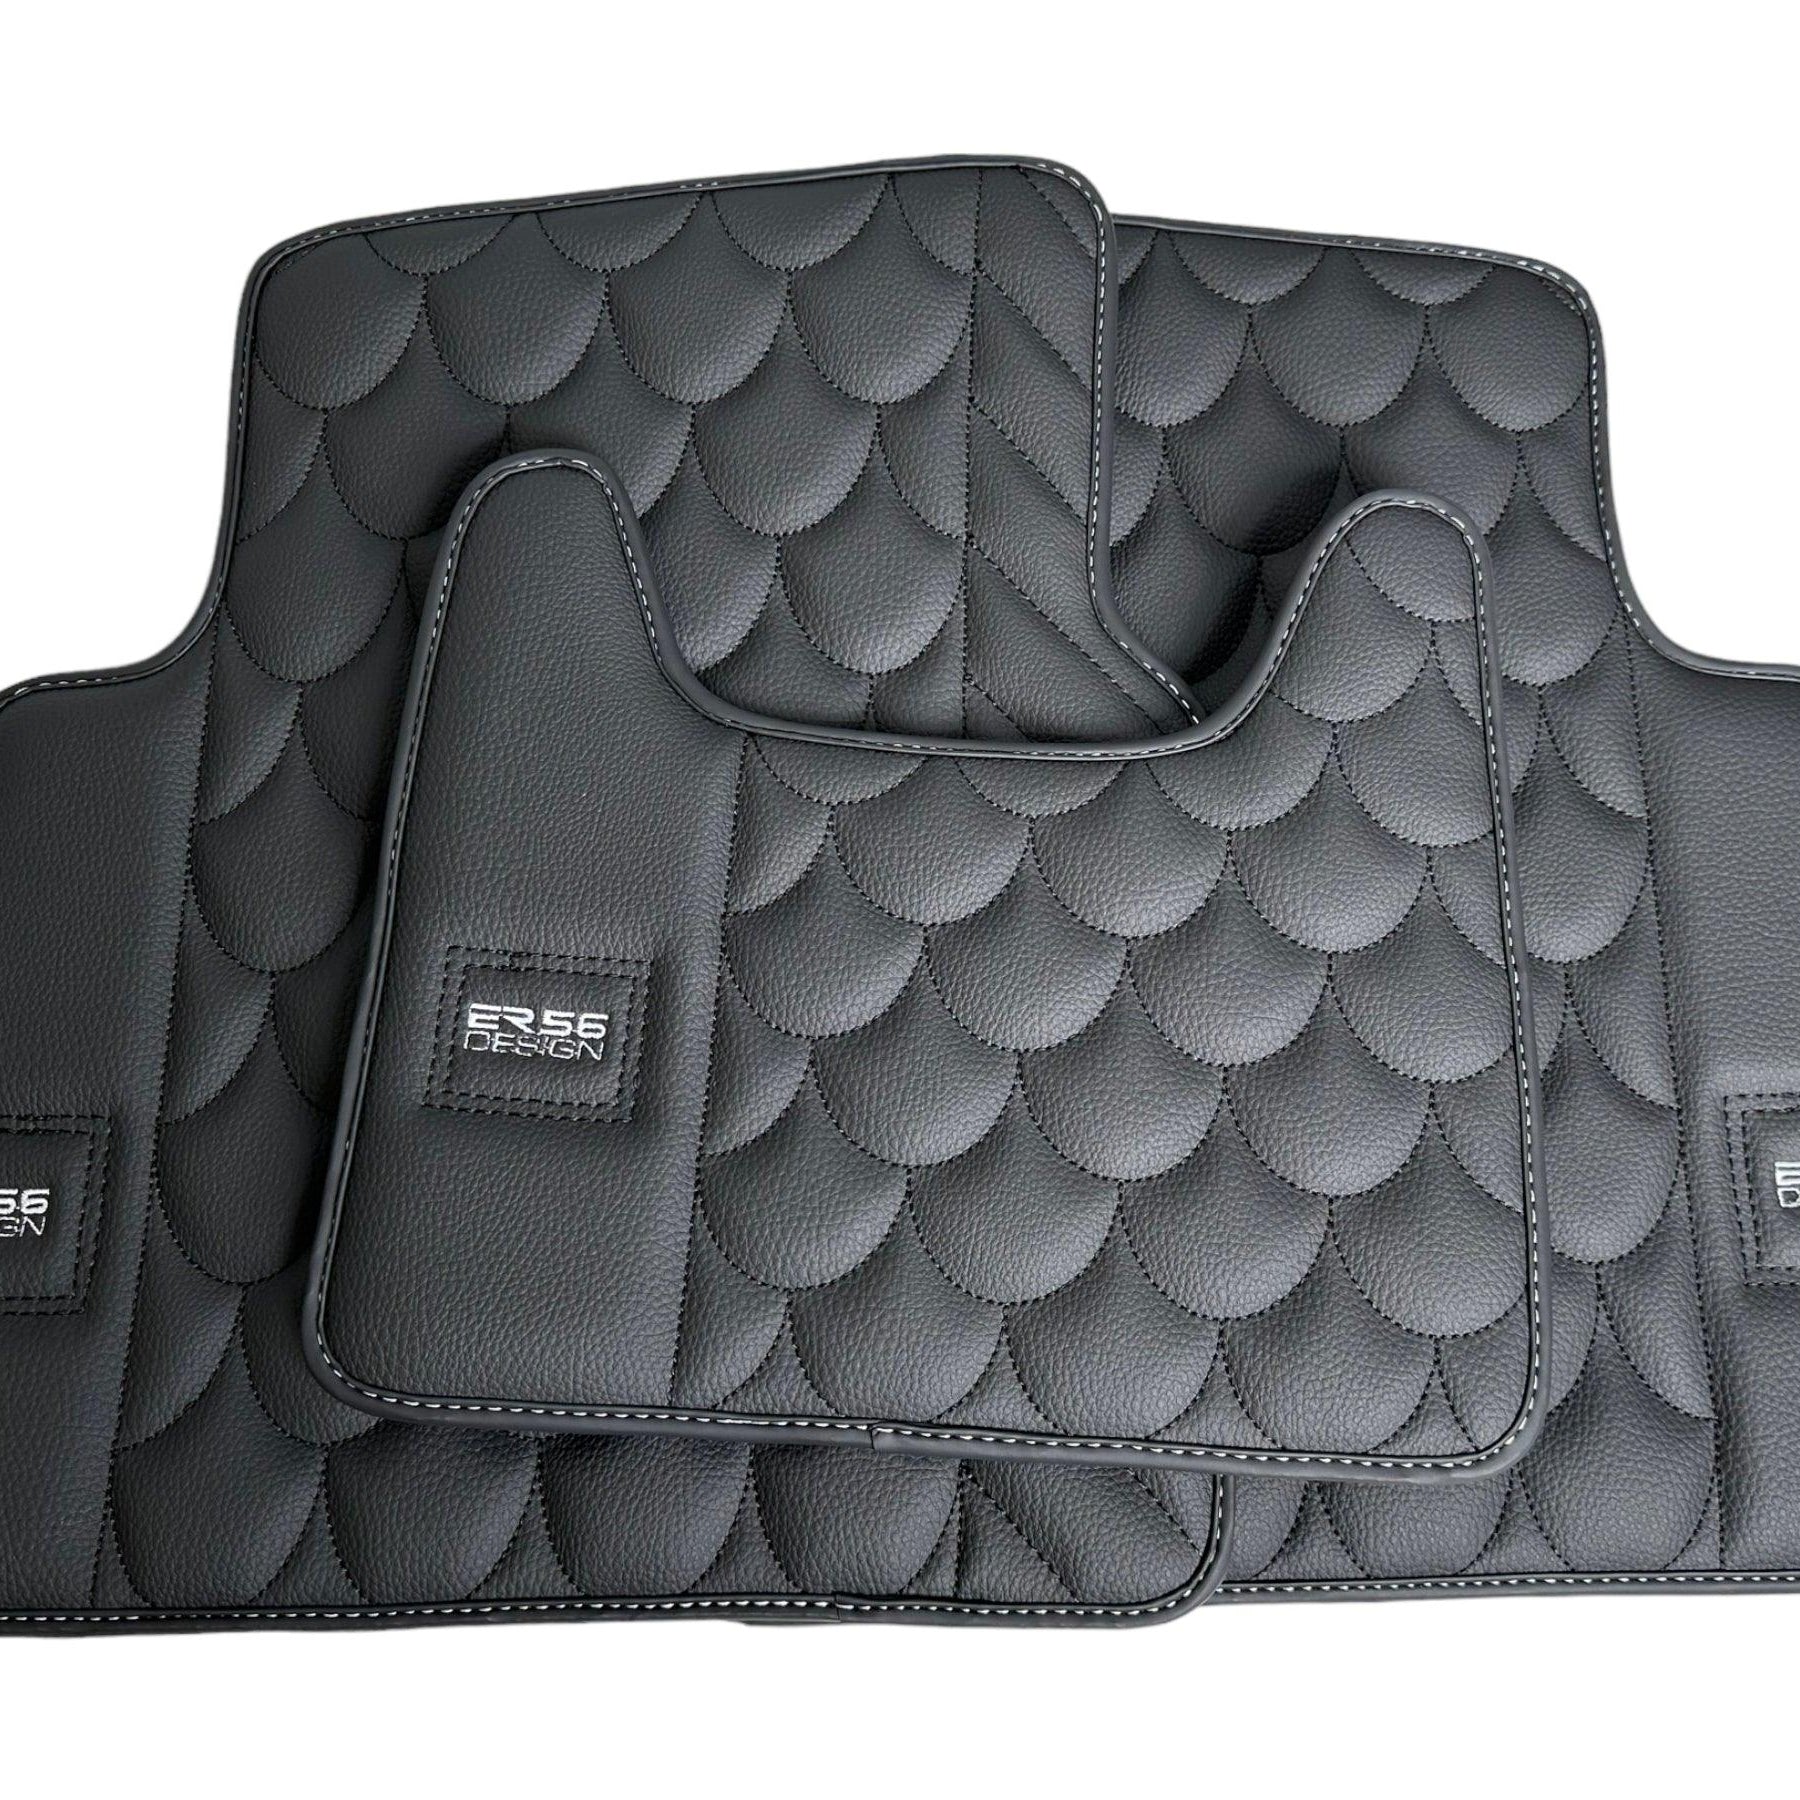 Black Leather Floor Mats For Mercedes-Benz G Class 2019-2022 W464 ER56 Design - AutoWin